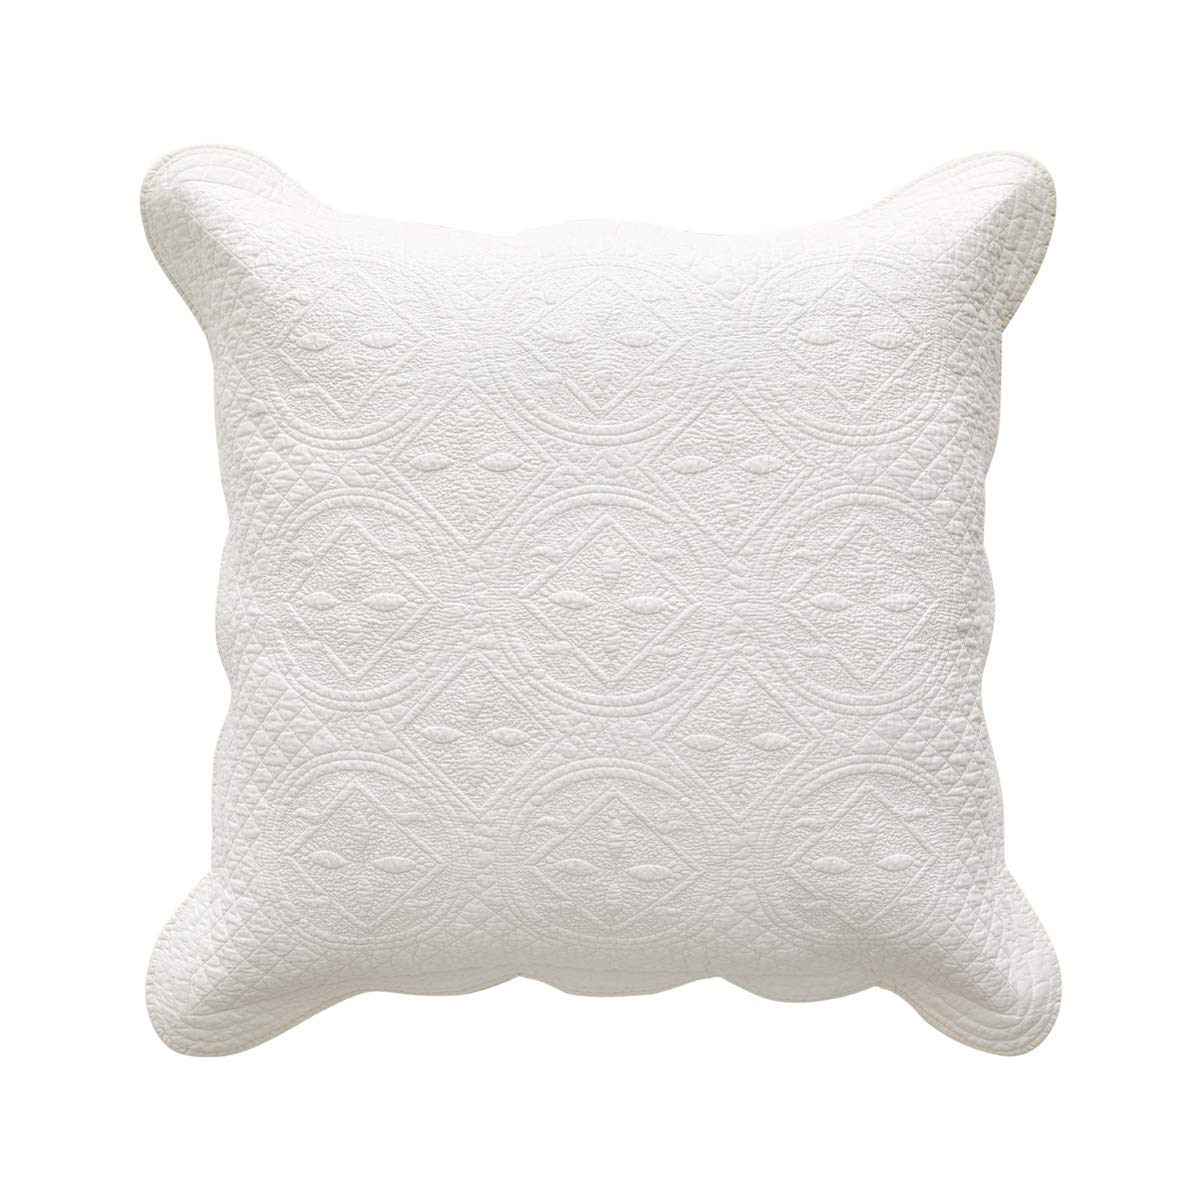 Calla Angel Sage Garden Luxury Pure Cotton Matelasse Quilted Pillow Sham, Euro, 26x26, Ivory